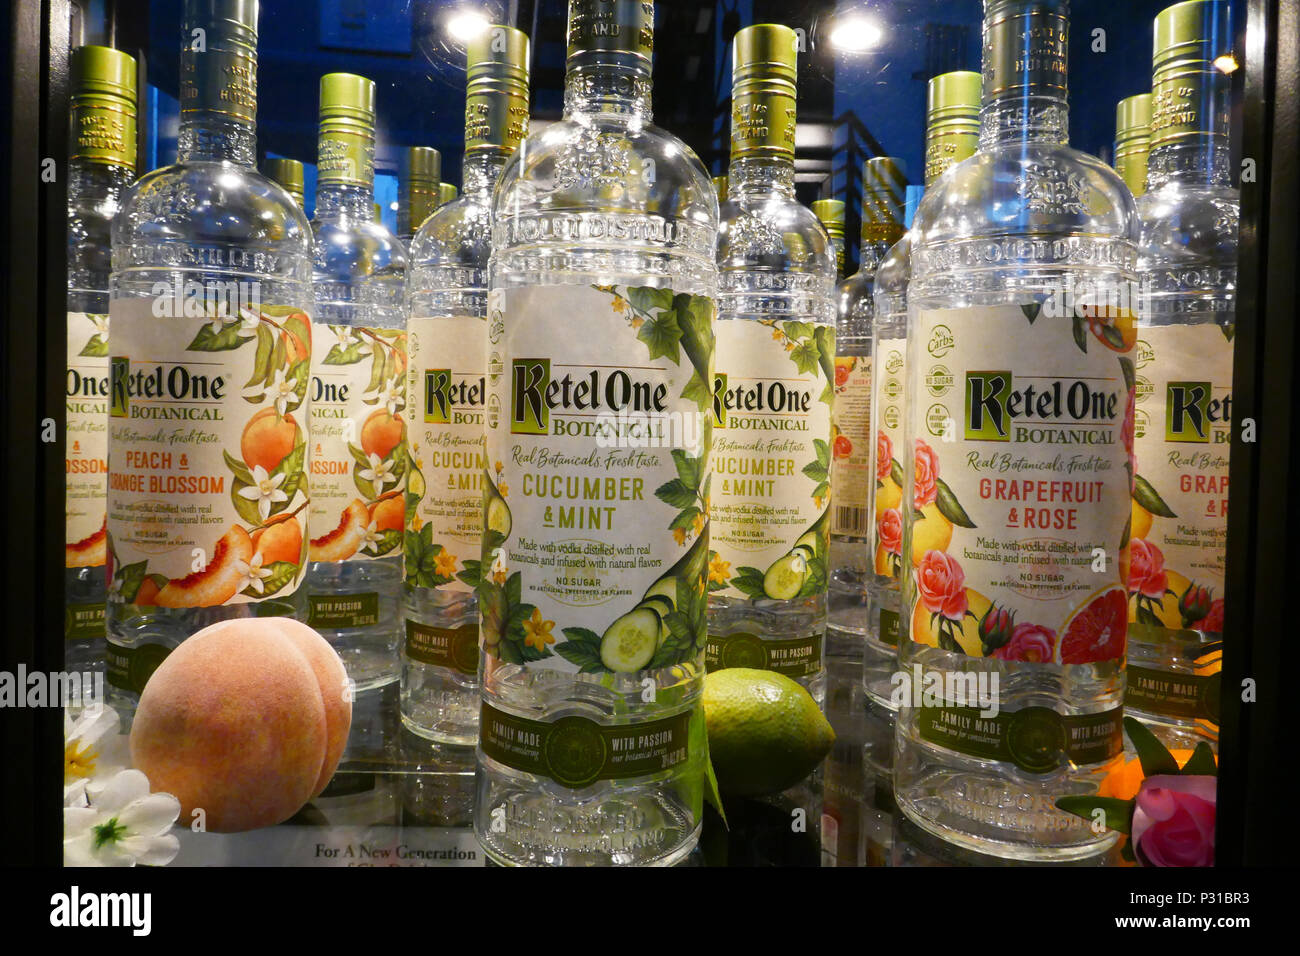 promotion bottles with botanical vodka for export at shop of Nolet, Schiedam, Holland Stock Photo